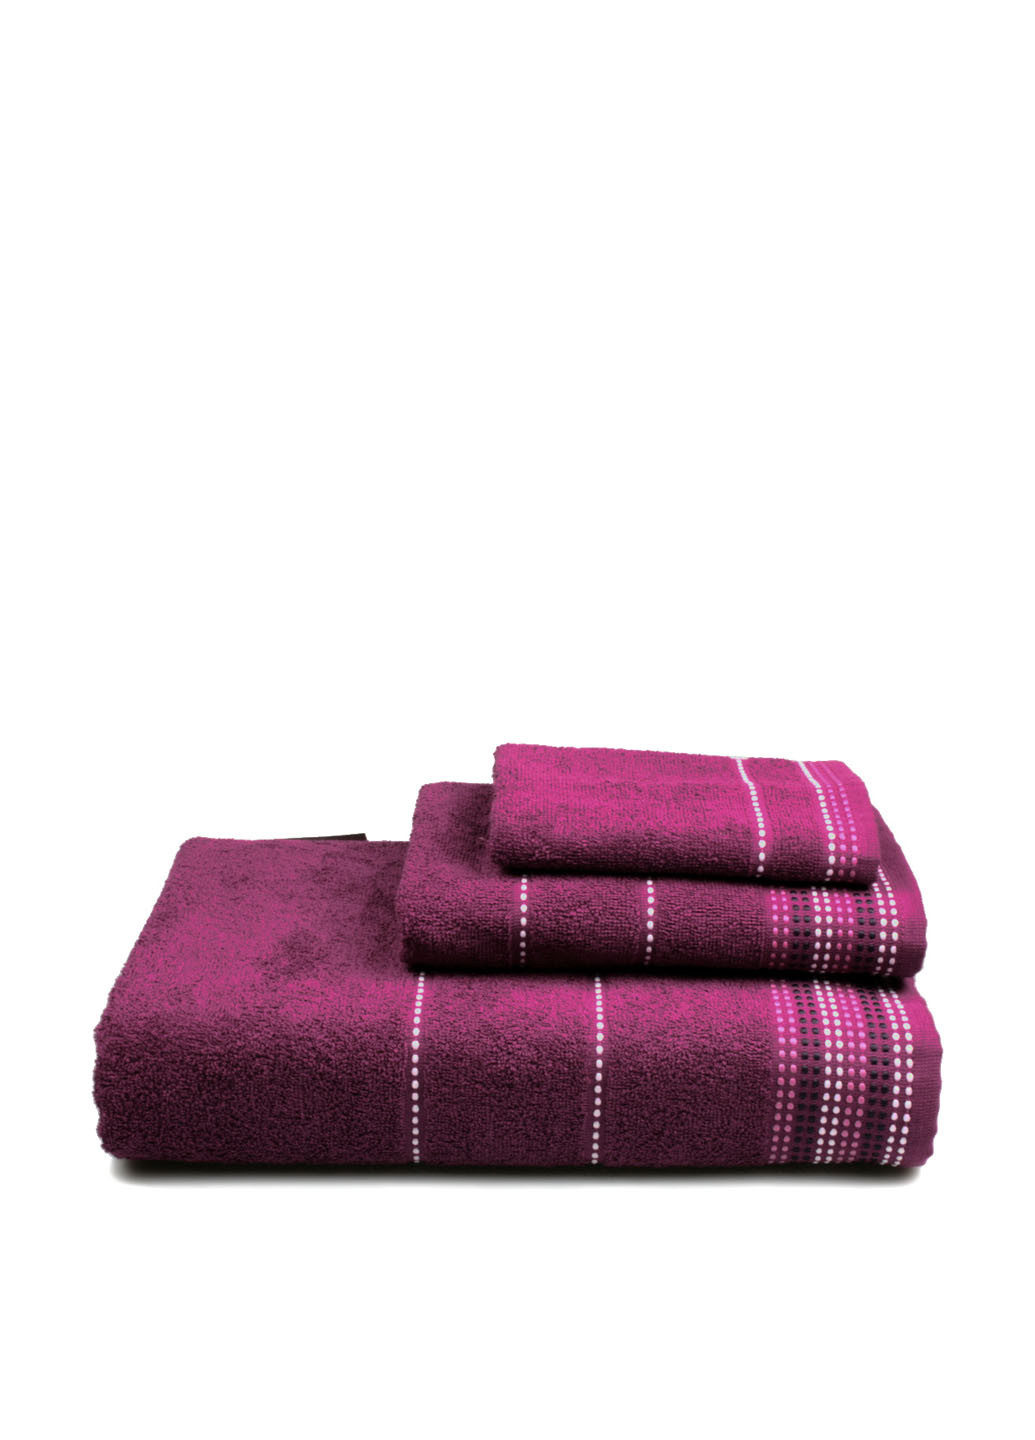 Home Line полотенце, 70х140 см геометрический фуксия производство - Турция